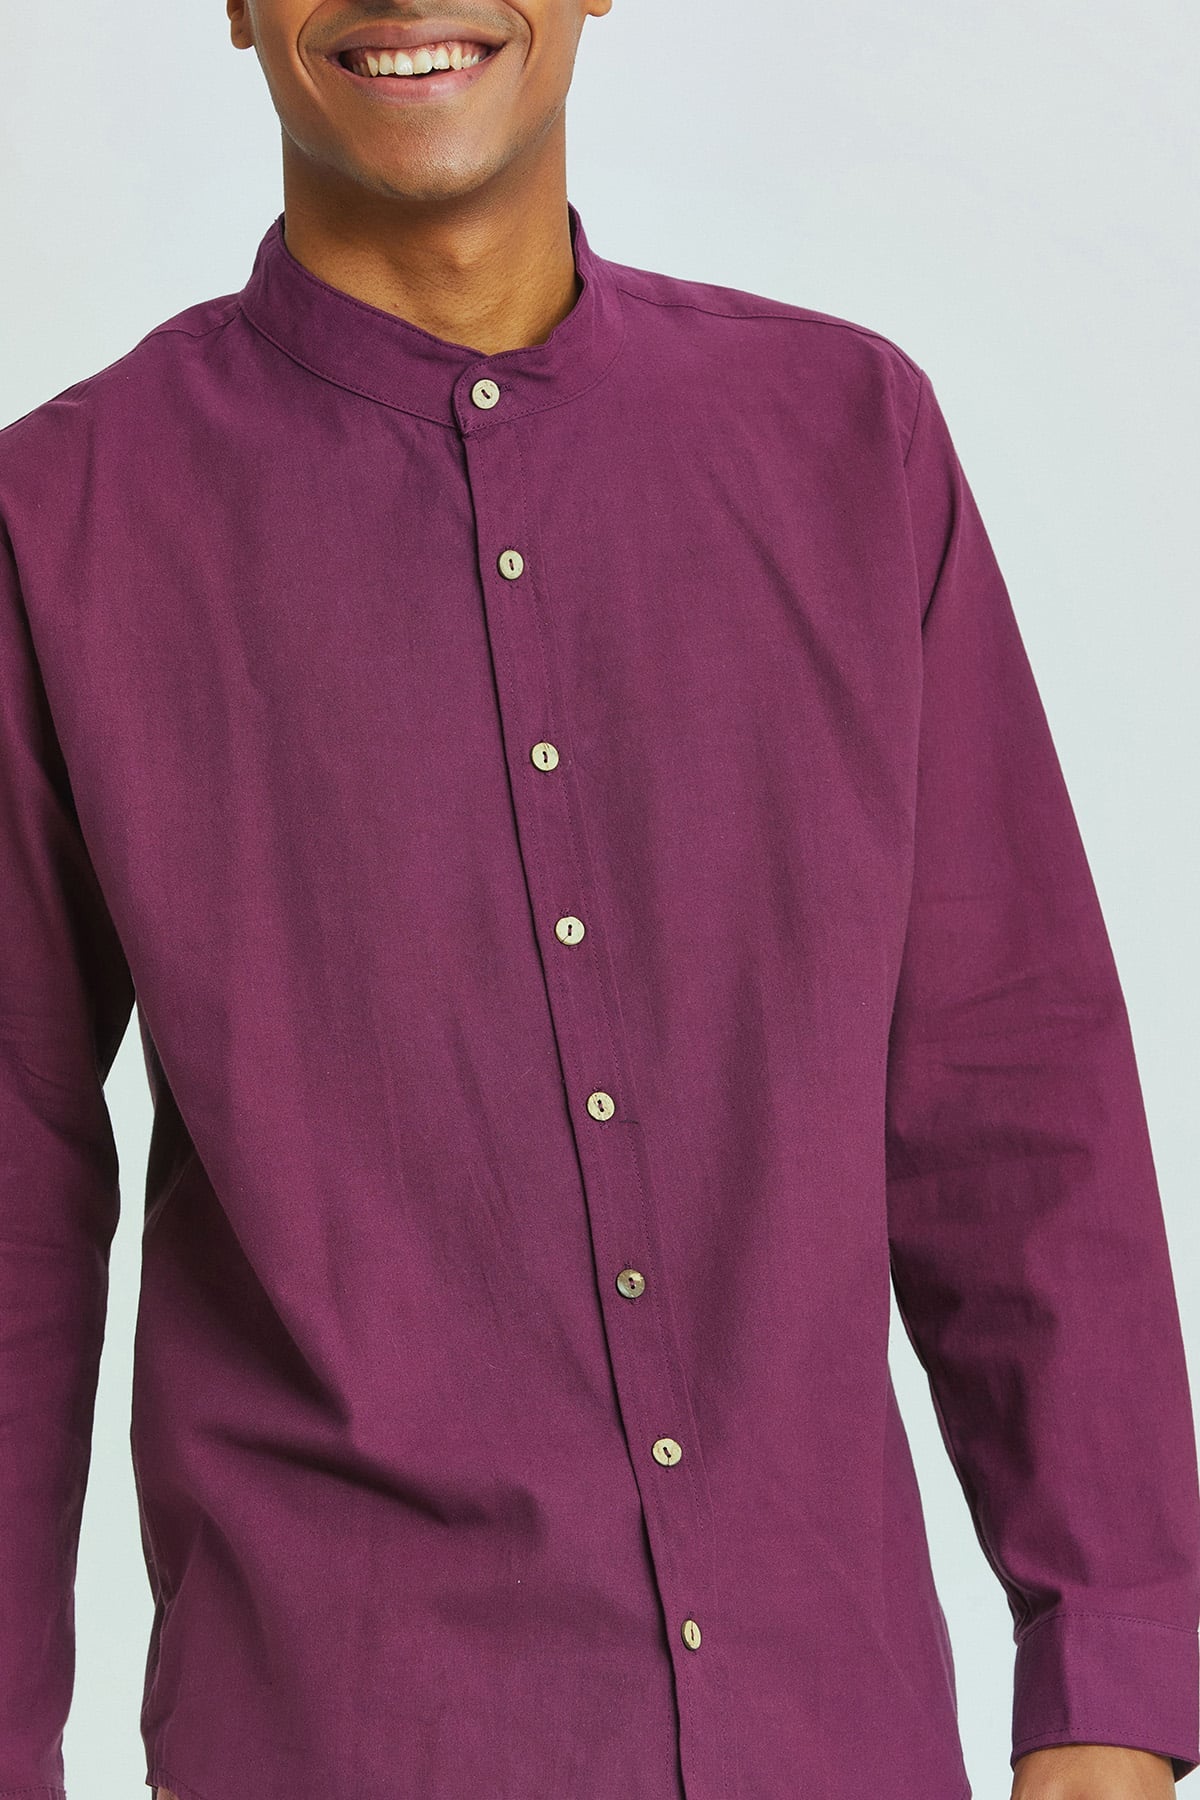 Band Collar Men's Shirt Purple